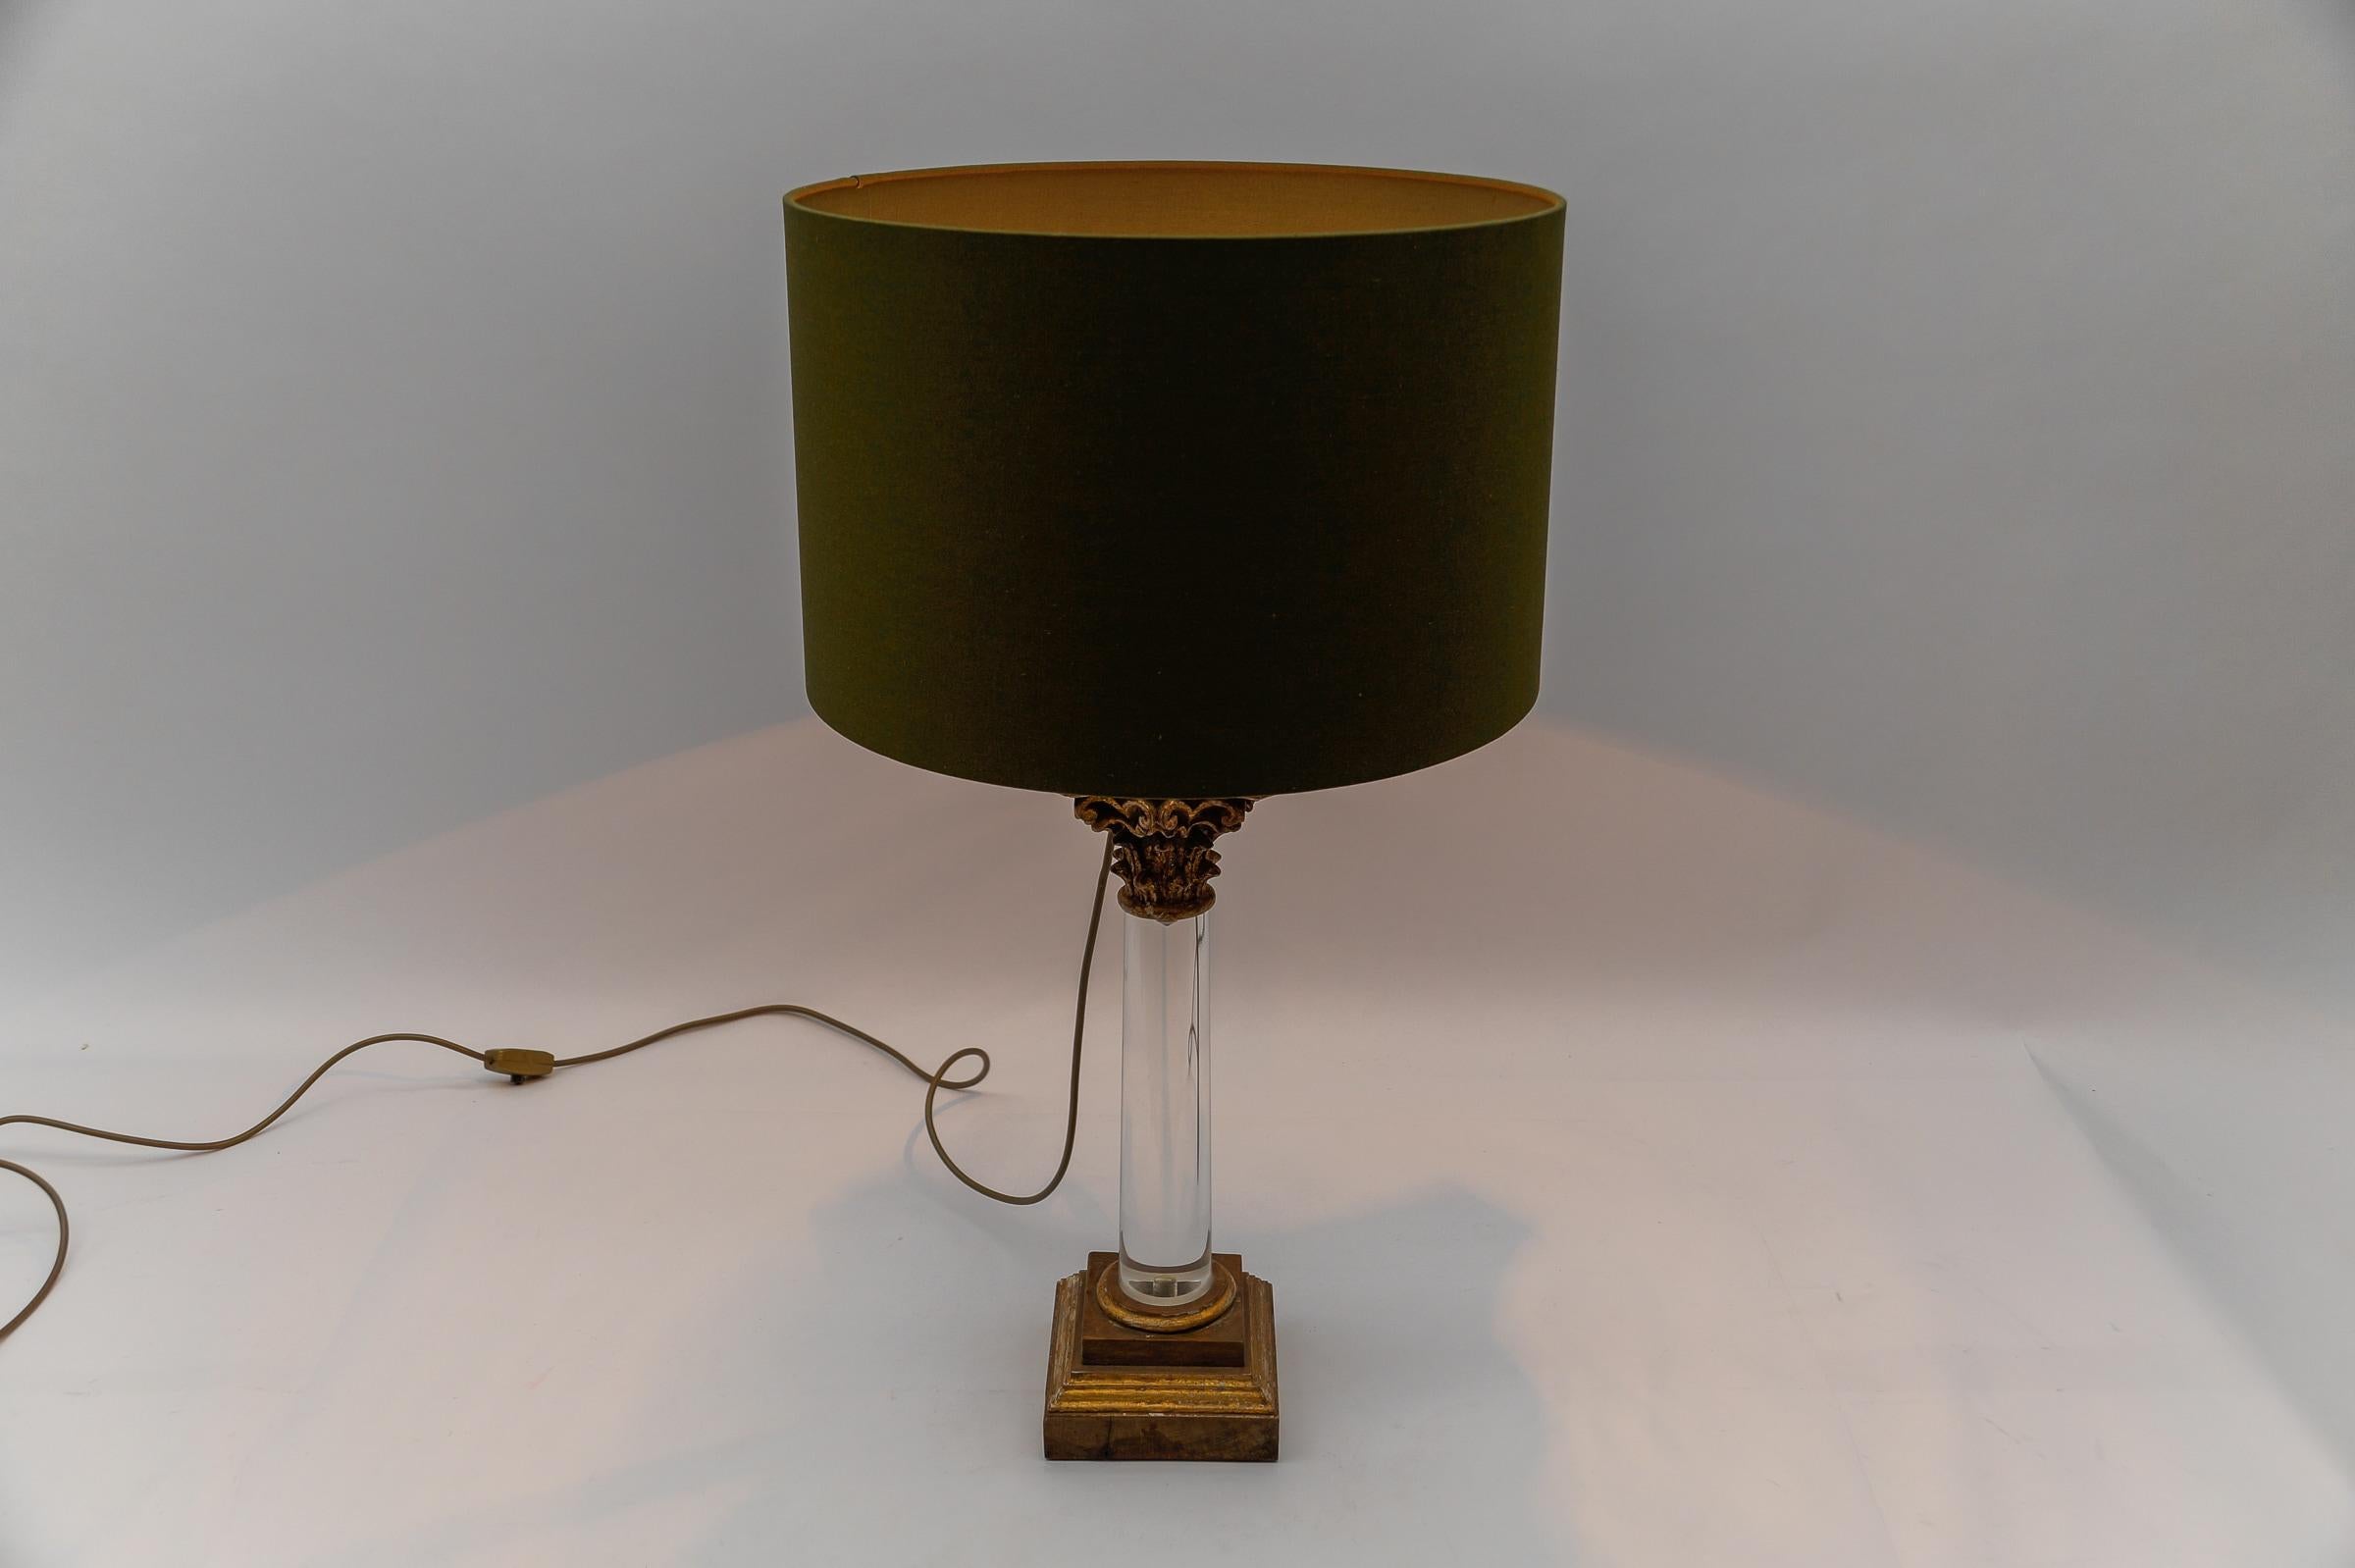 Metal Italian Mid-Century Modern Acrylic & Wood Table Lamp Base, 1960s Italy For Sale